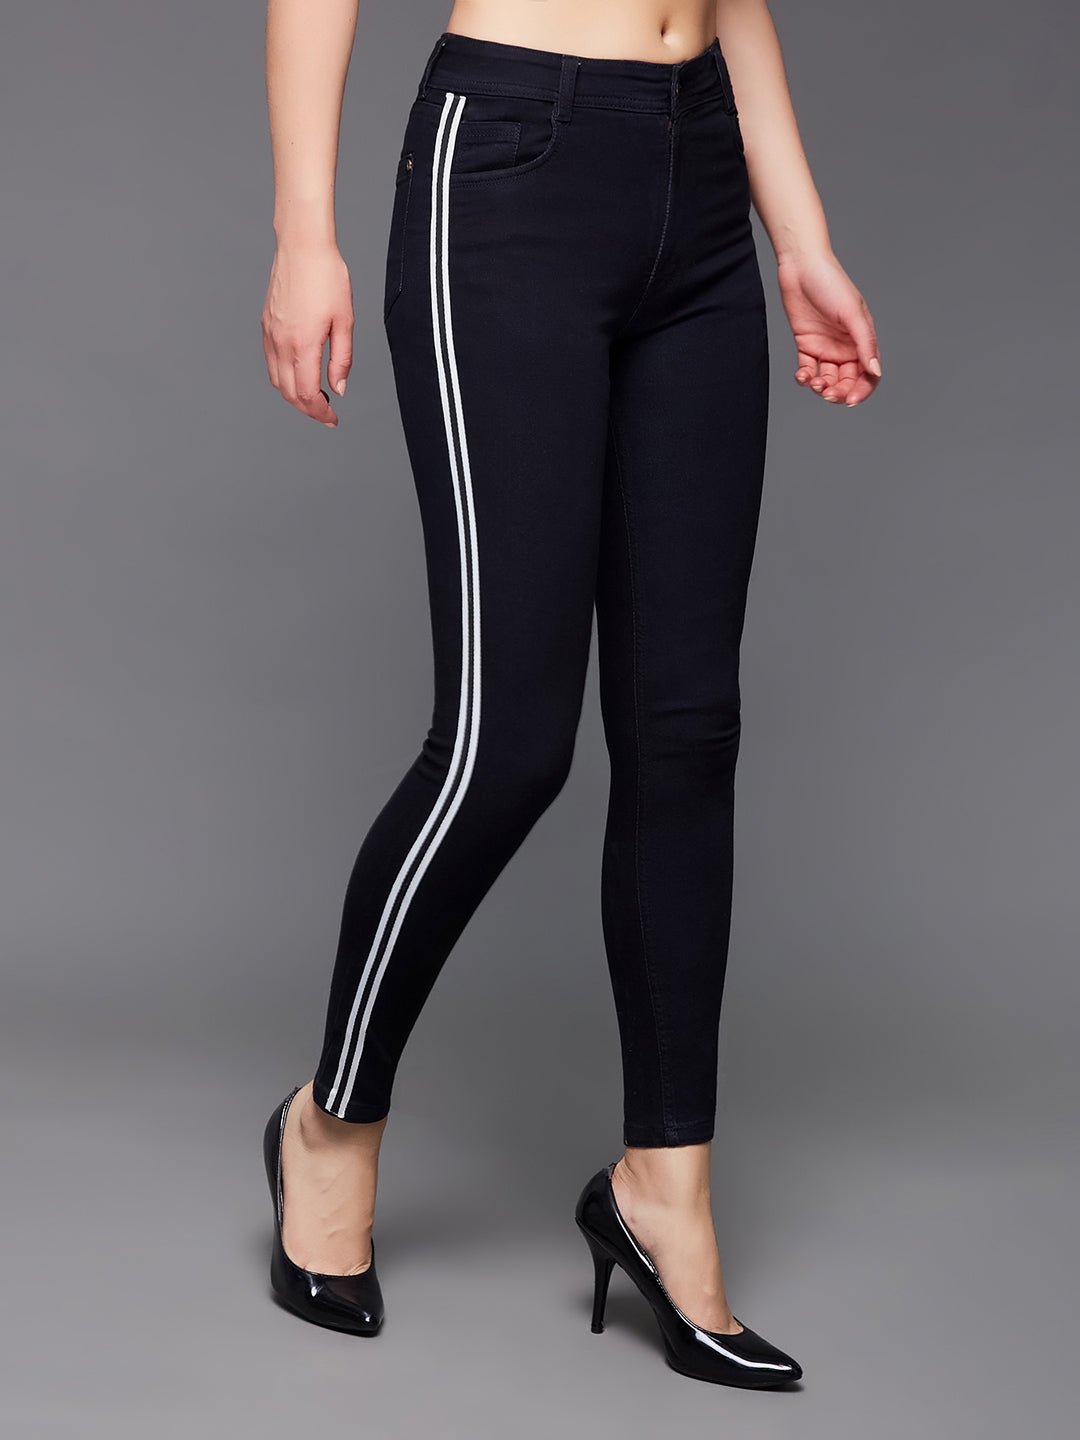 Black Slim-Fit Mid-Rise Clean Look Regular-Length Stretchable Denim Jeans